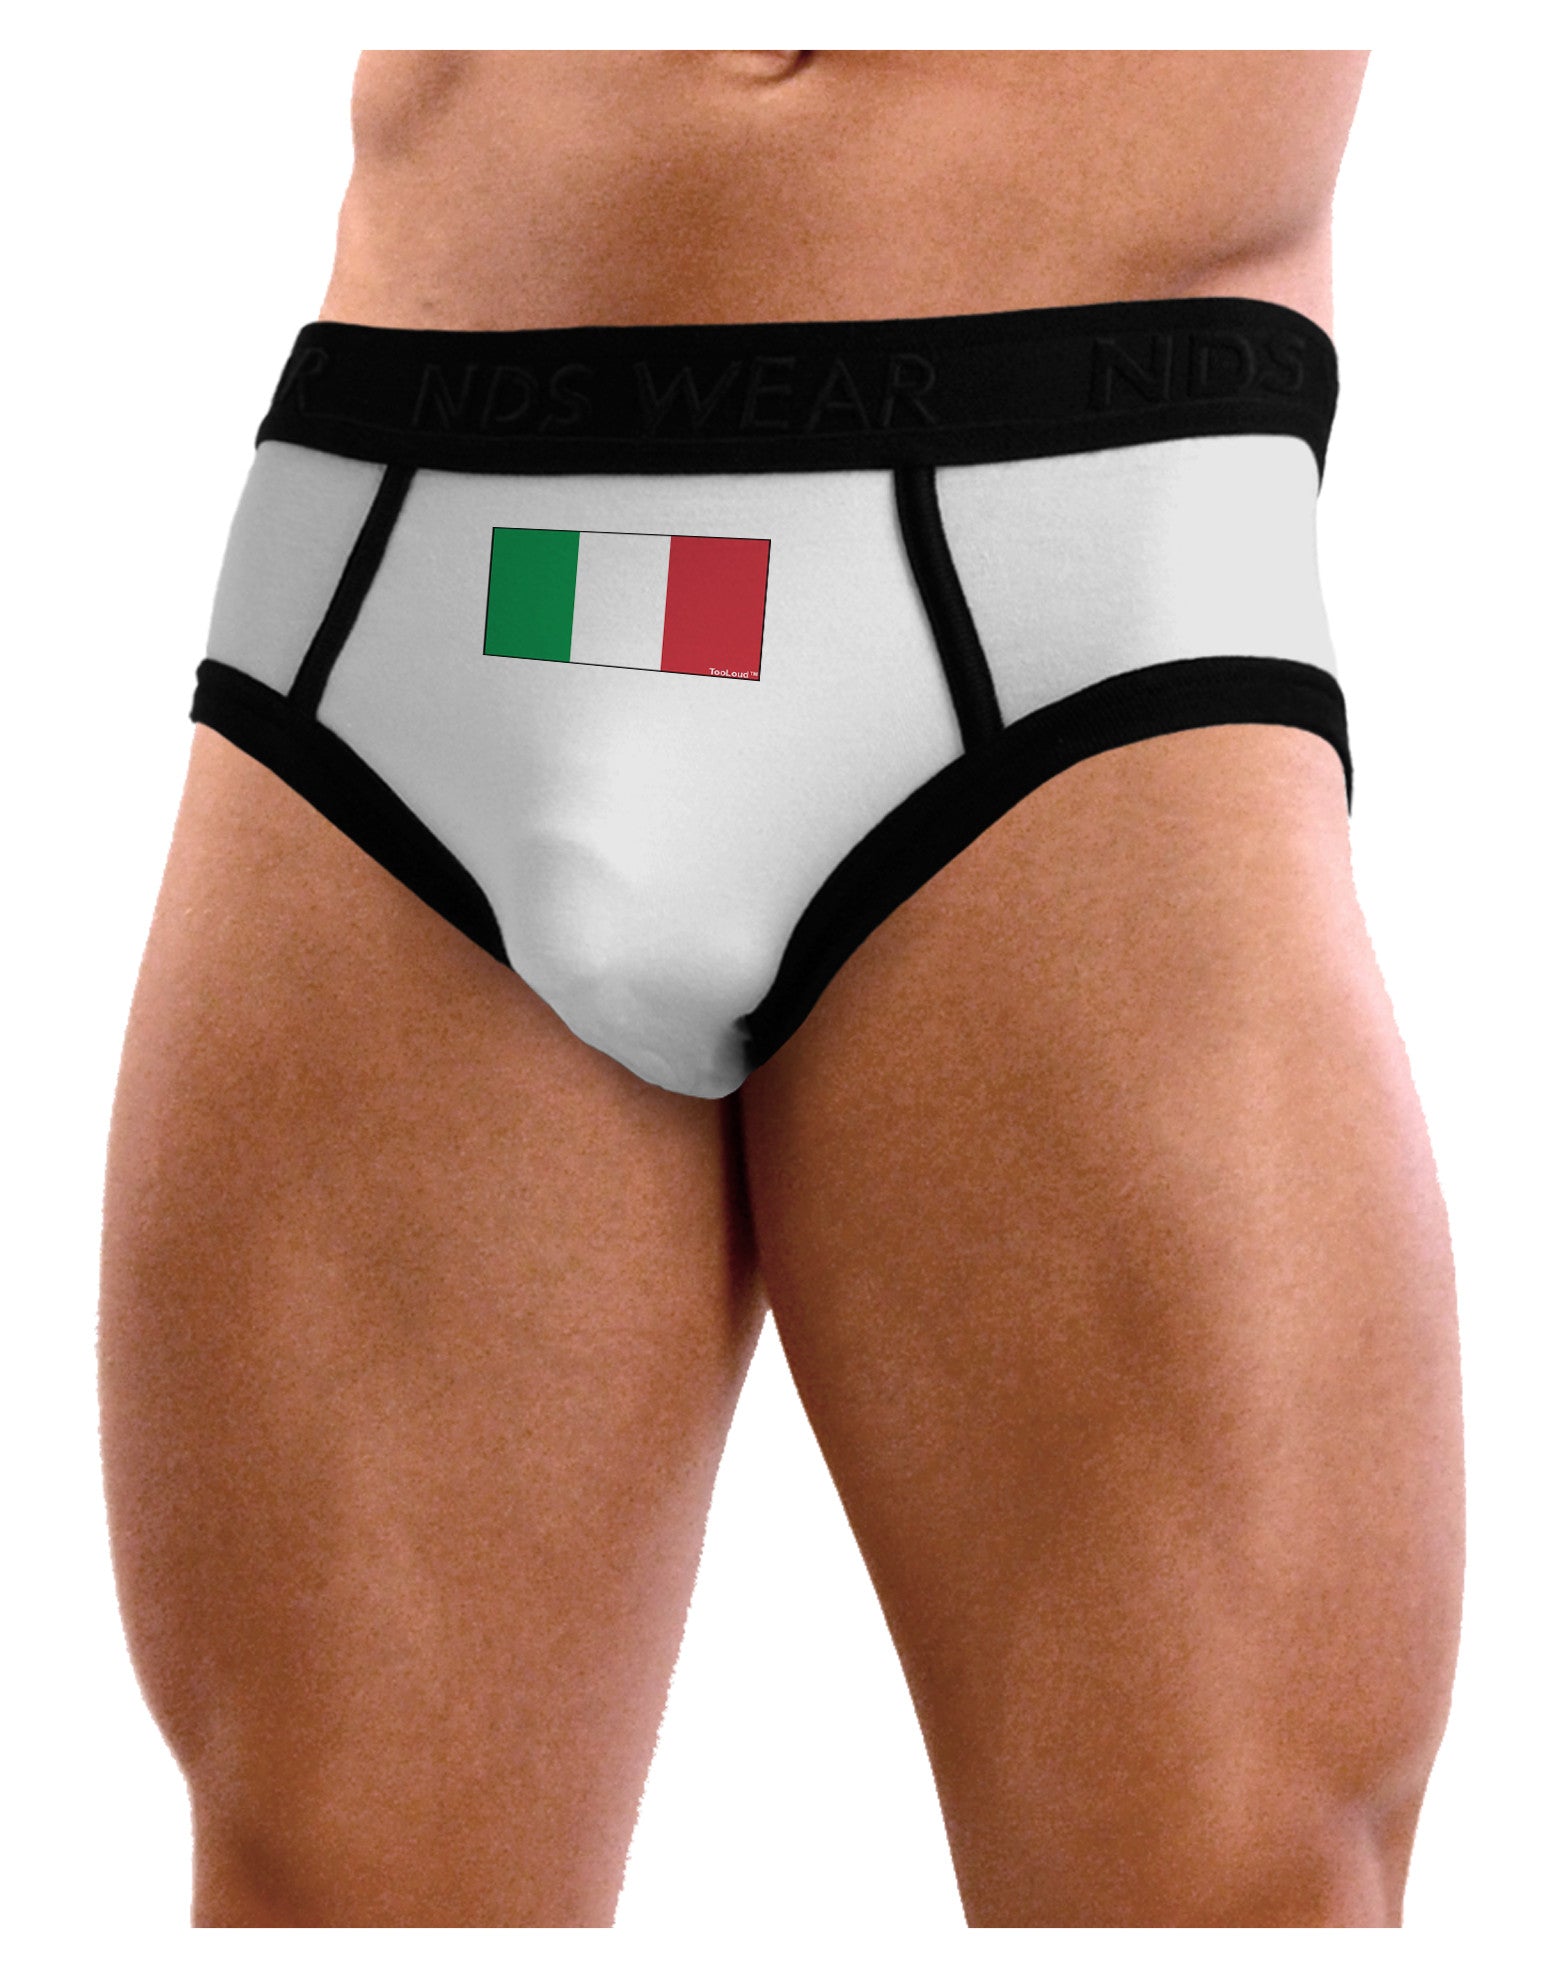 Italian Flag - Italy Mens NDS Wear Briefs Underwear by TooLoud